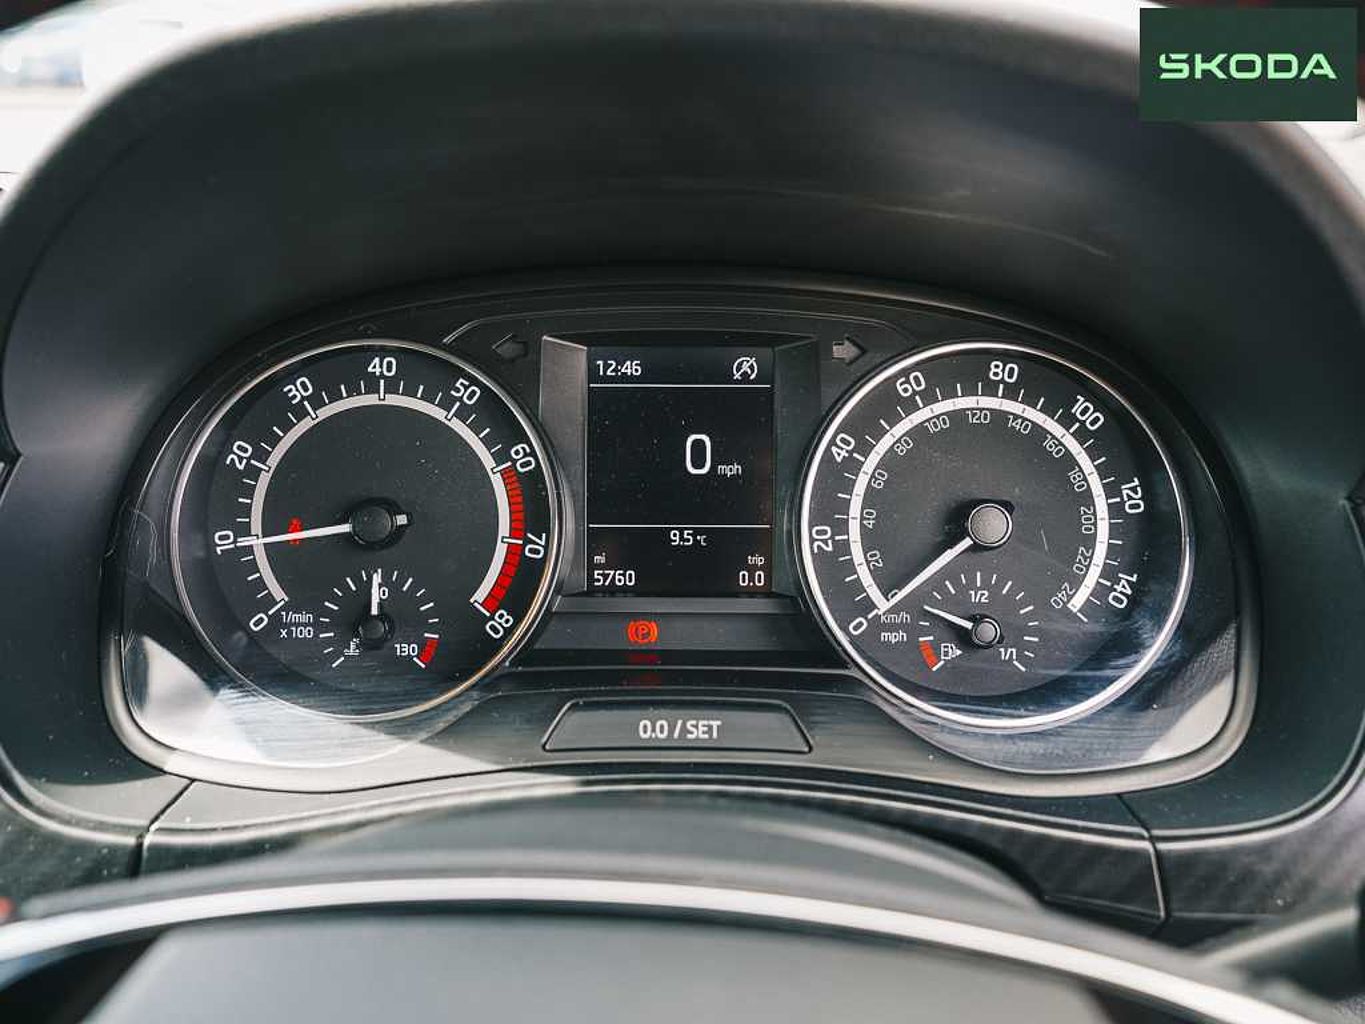 SKODA Fabia 1.0 TSI Monte Carlo (95PS) 5-Dr Hatchback